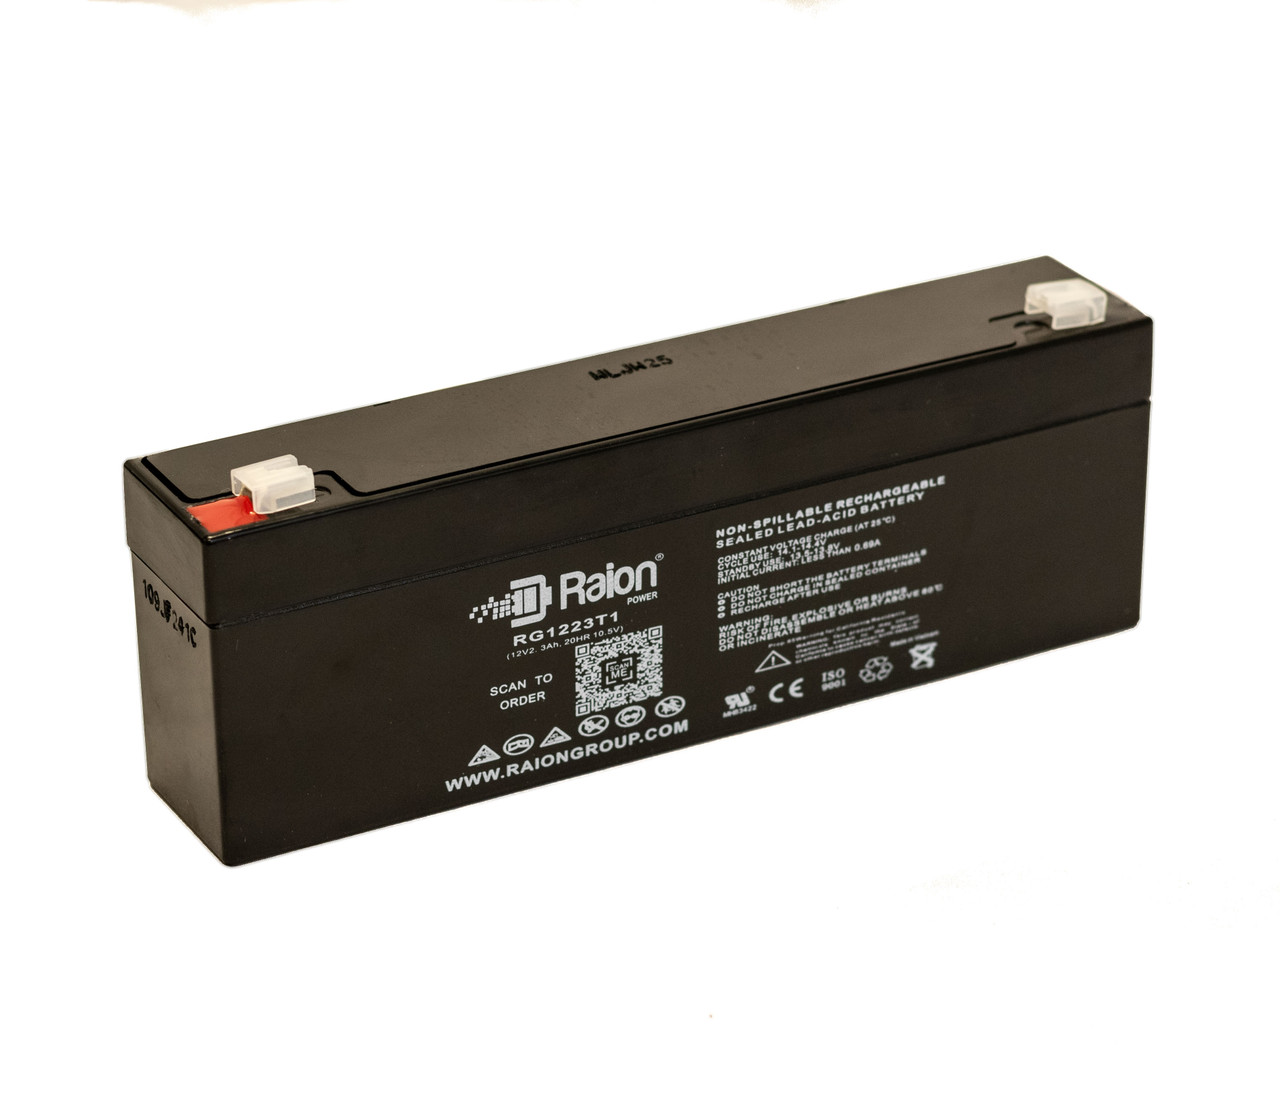 Raion Power RG1223T1 Replacement Battery for Birtcher Defibrillator 320